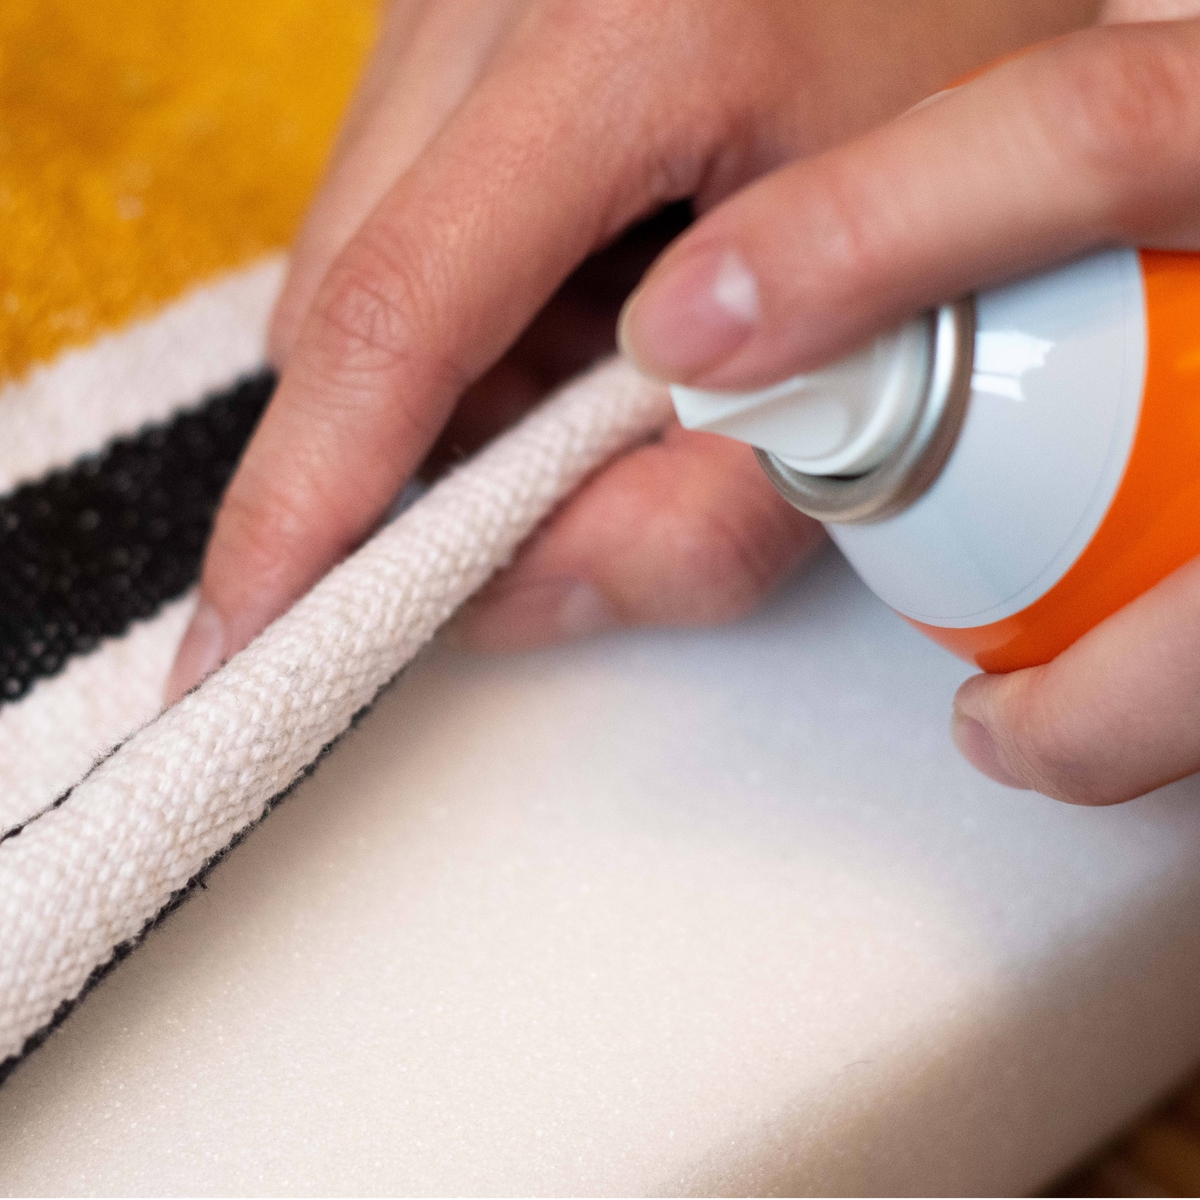 Dan Tack Foam & Fabric Spray Adhesive or Glue Can 16 oz